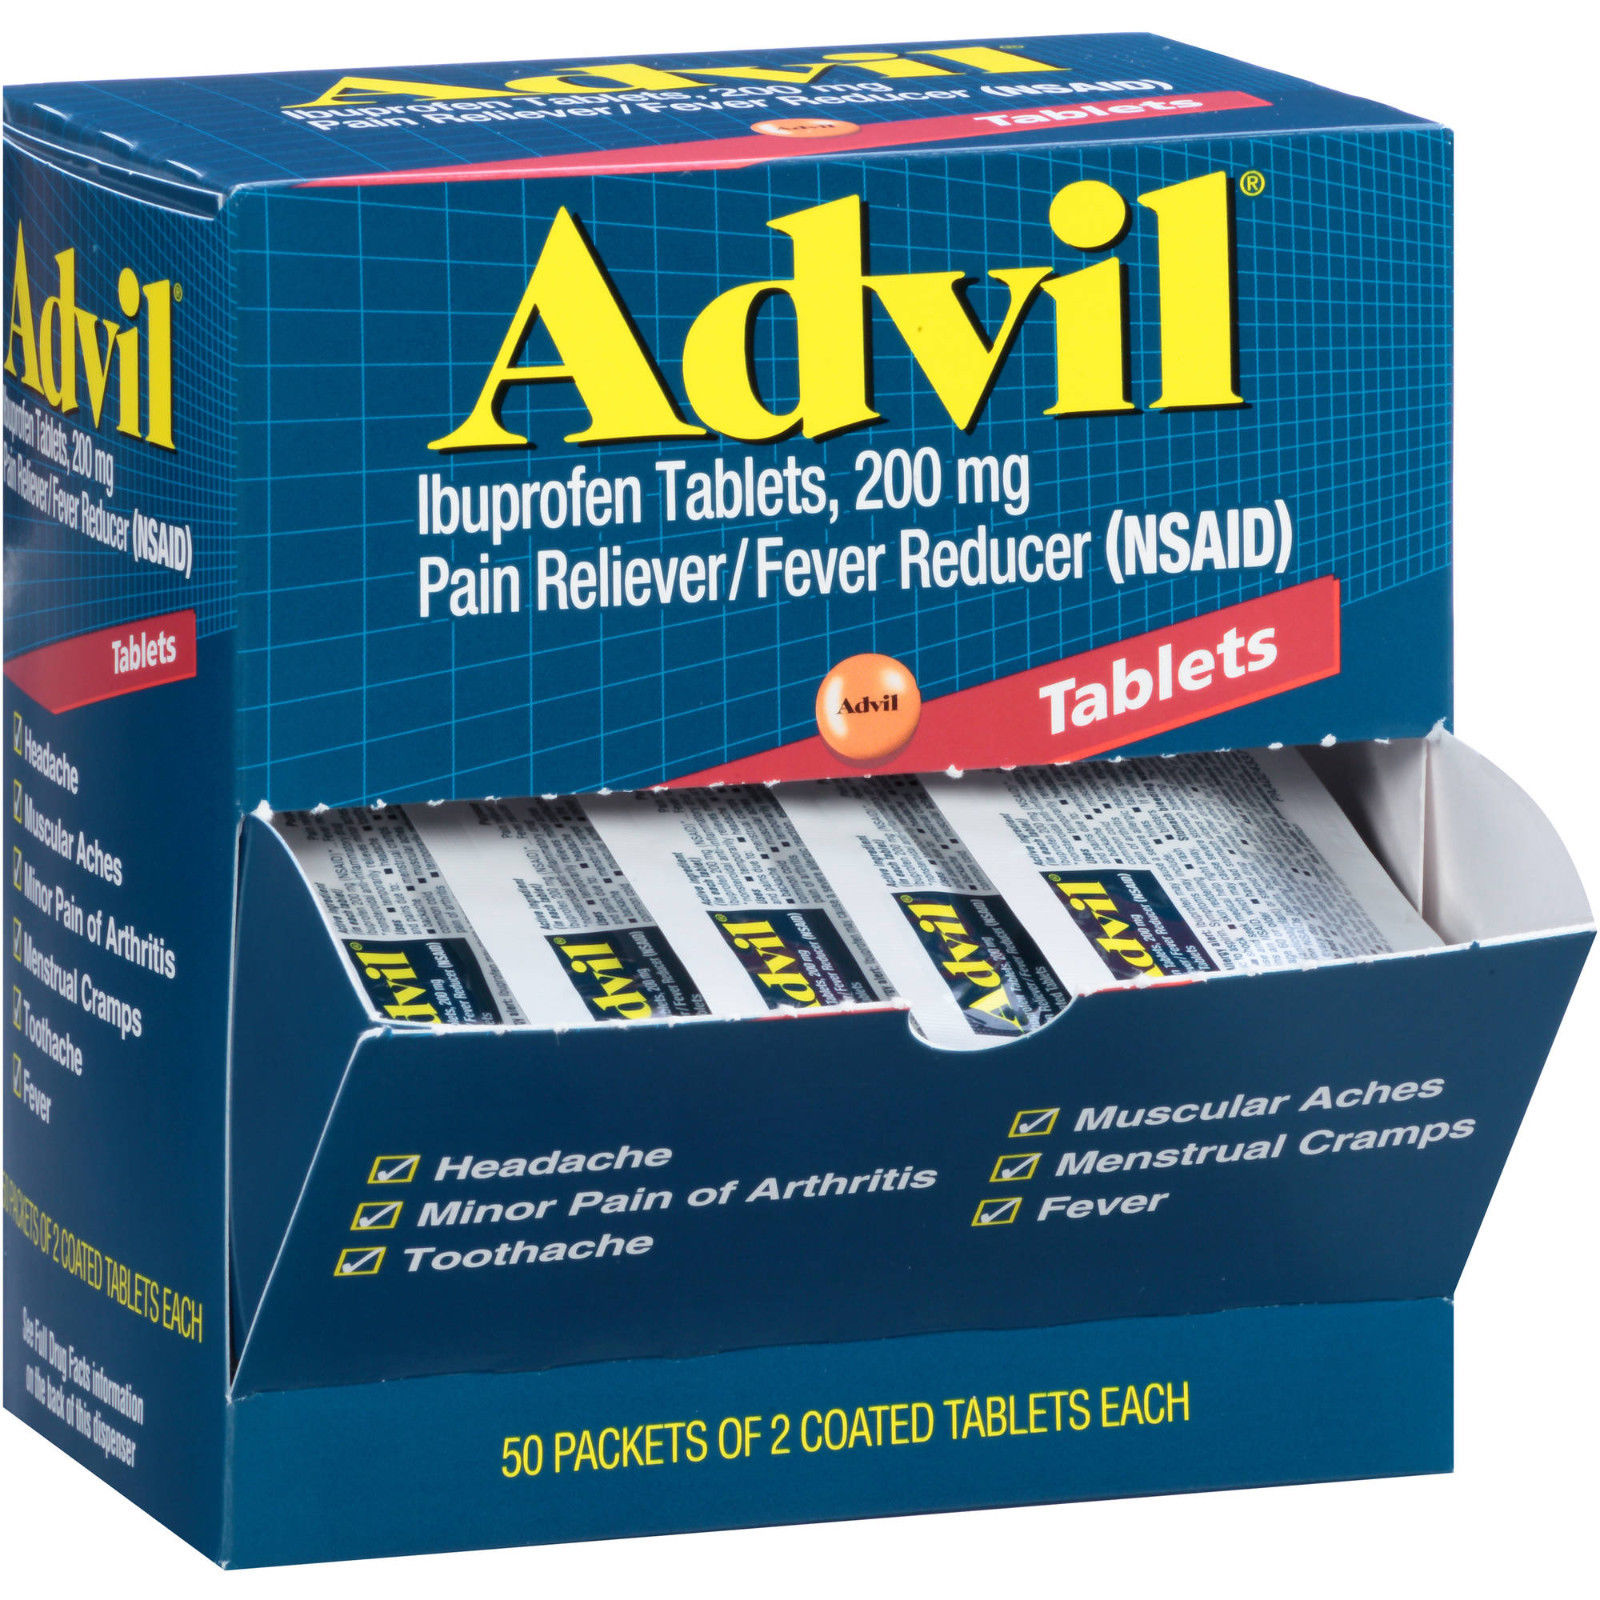 Advil. 